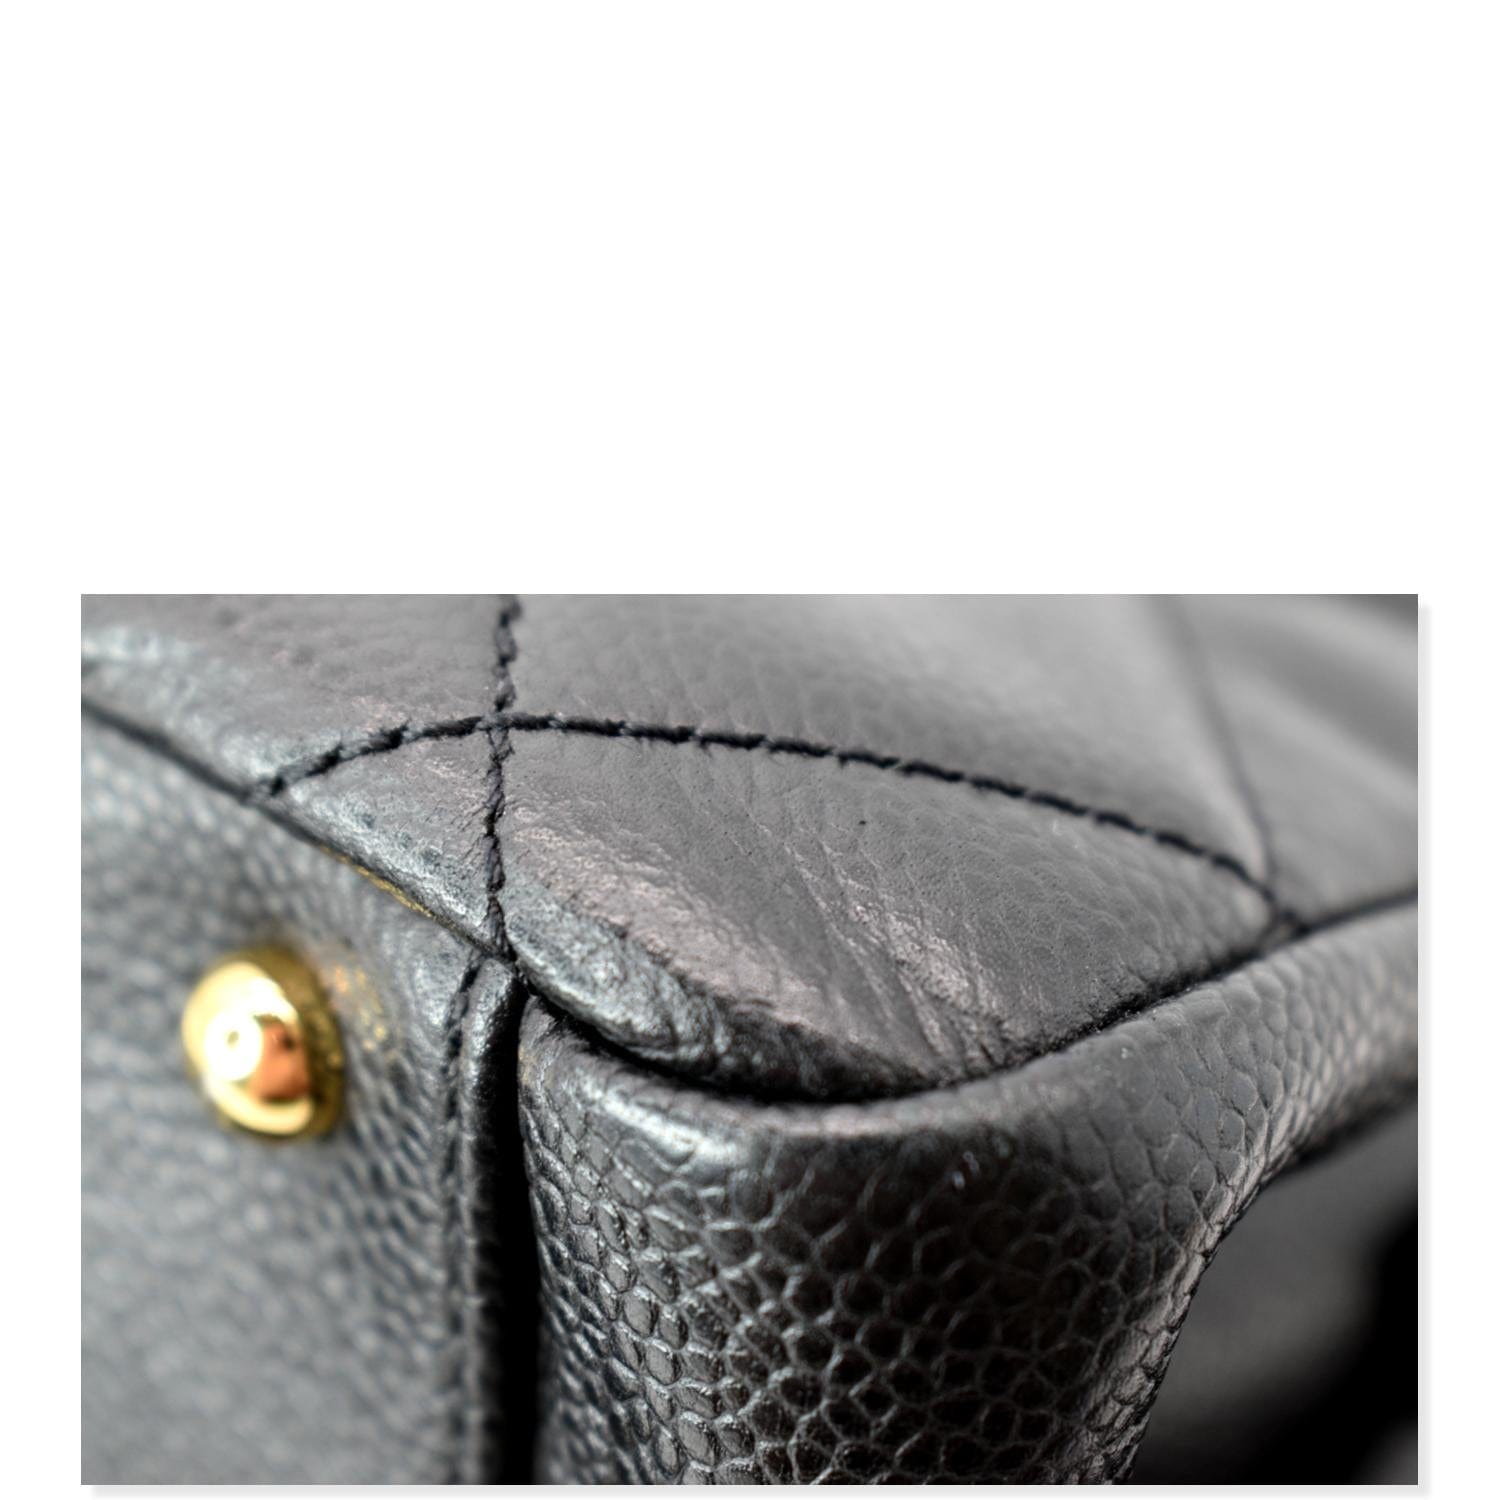 Chanel Timeless Jumbo Flap Bag Handbag Black Lamb Leather ref